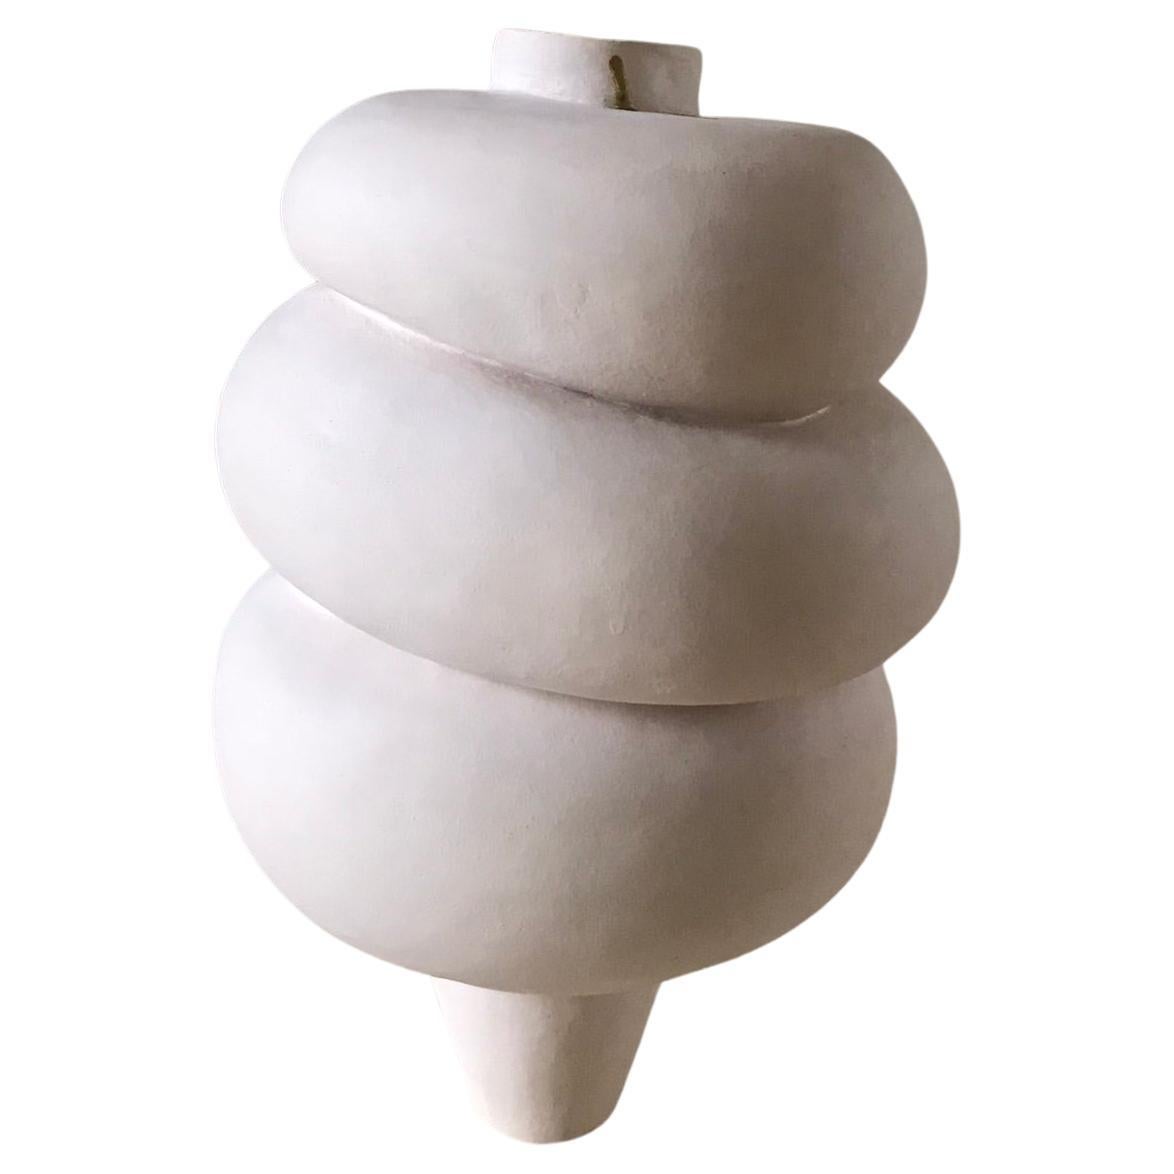 Modder Calmness Ceramic Sculpture by Françoise Jeffrey